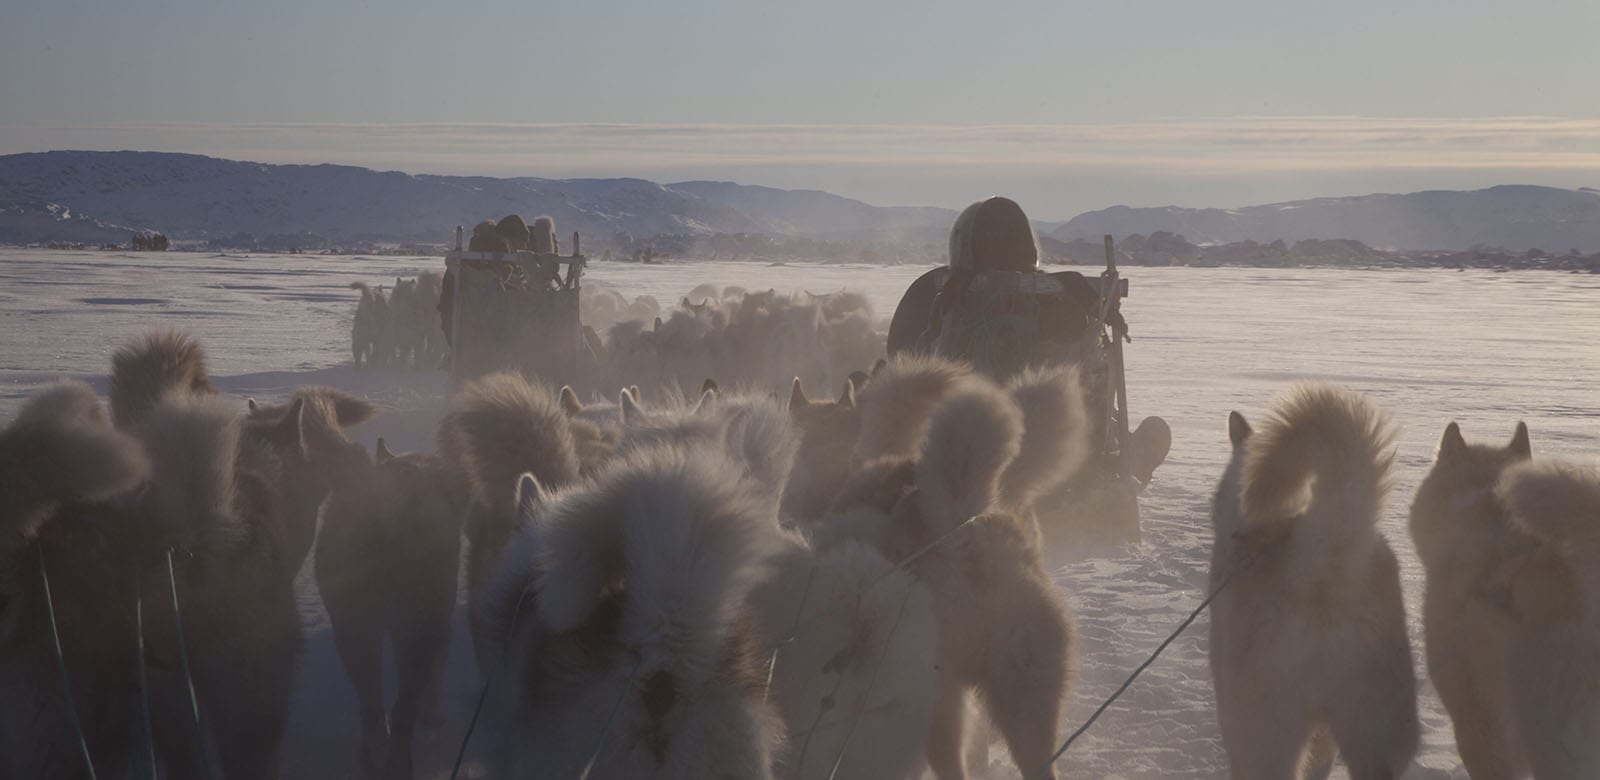 Photographer: David Trood - Visit Greenland